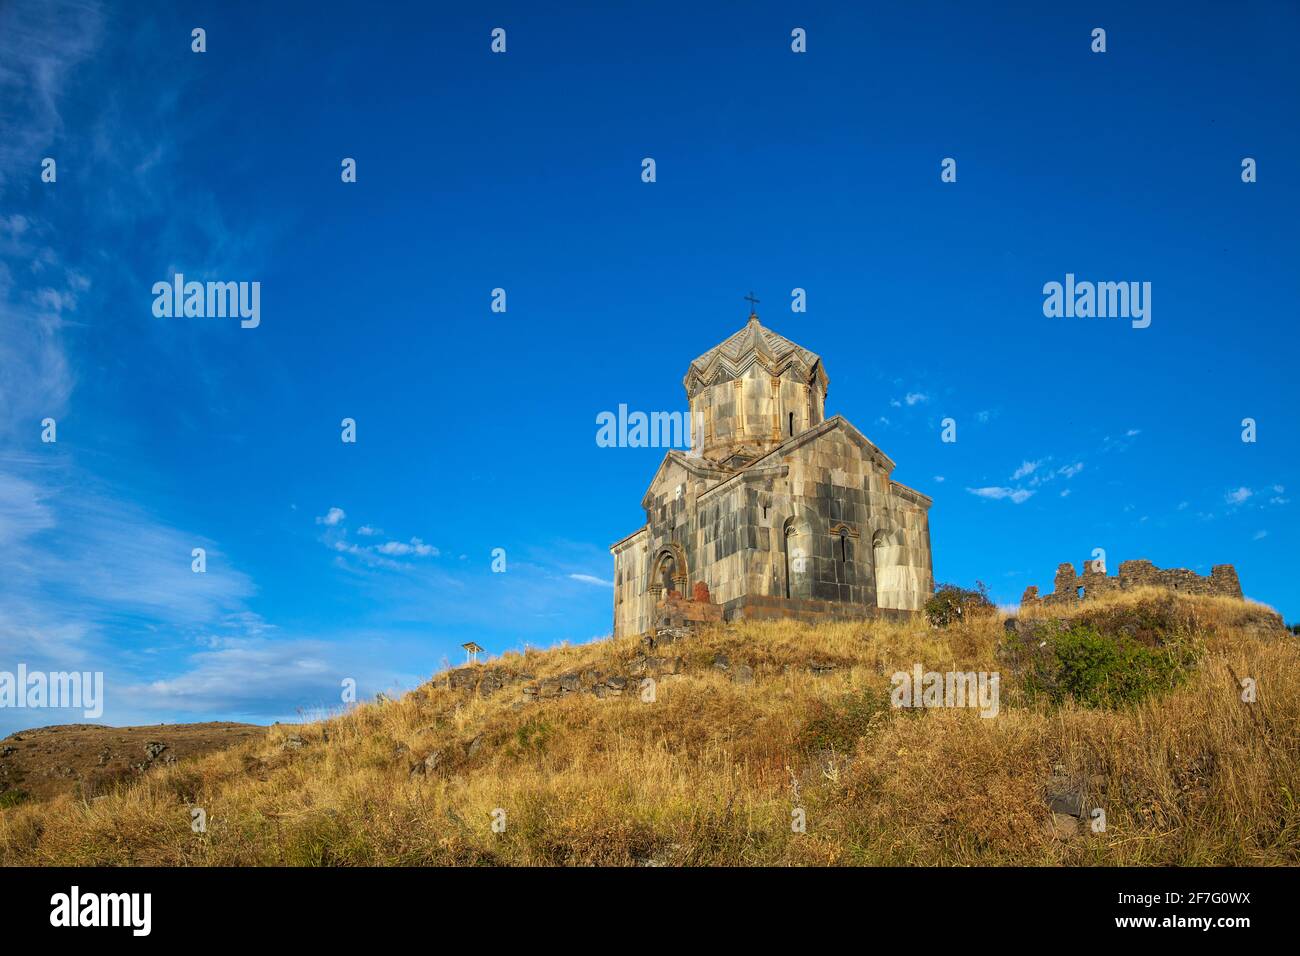 Armenia, Aragatsotn, Yerevan, Church of Surb Astvatsatsin also known as Vahramashen Church at Amberd fortress located on the slopes of Mount Aragats, Stock Photo